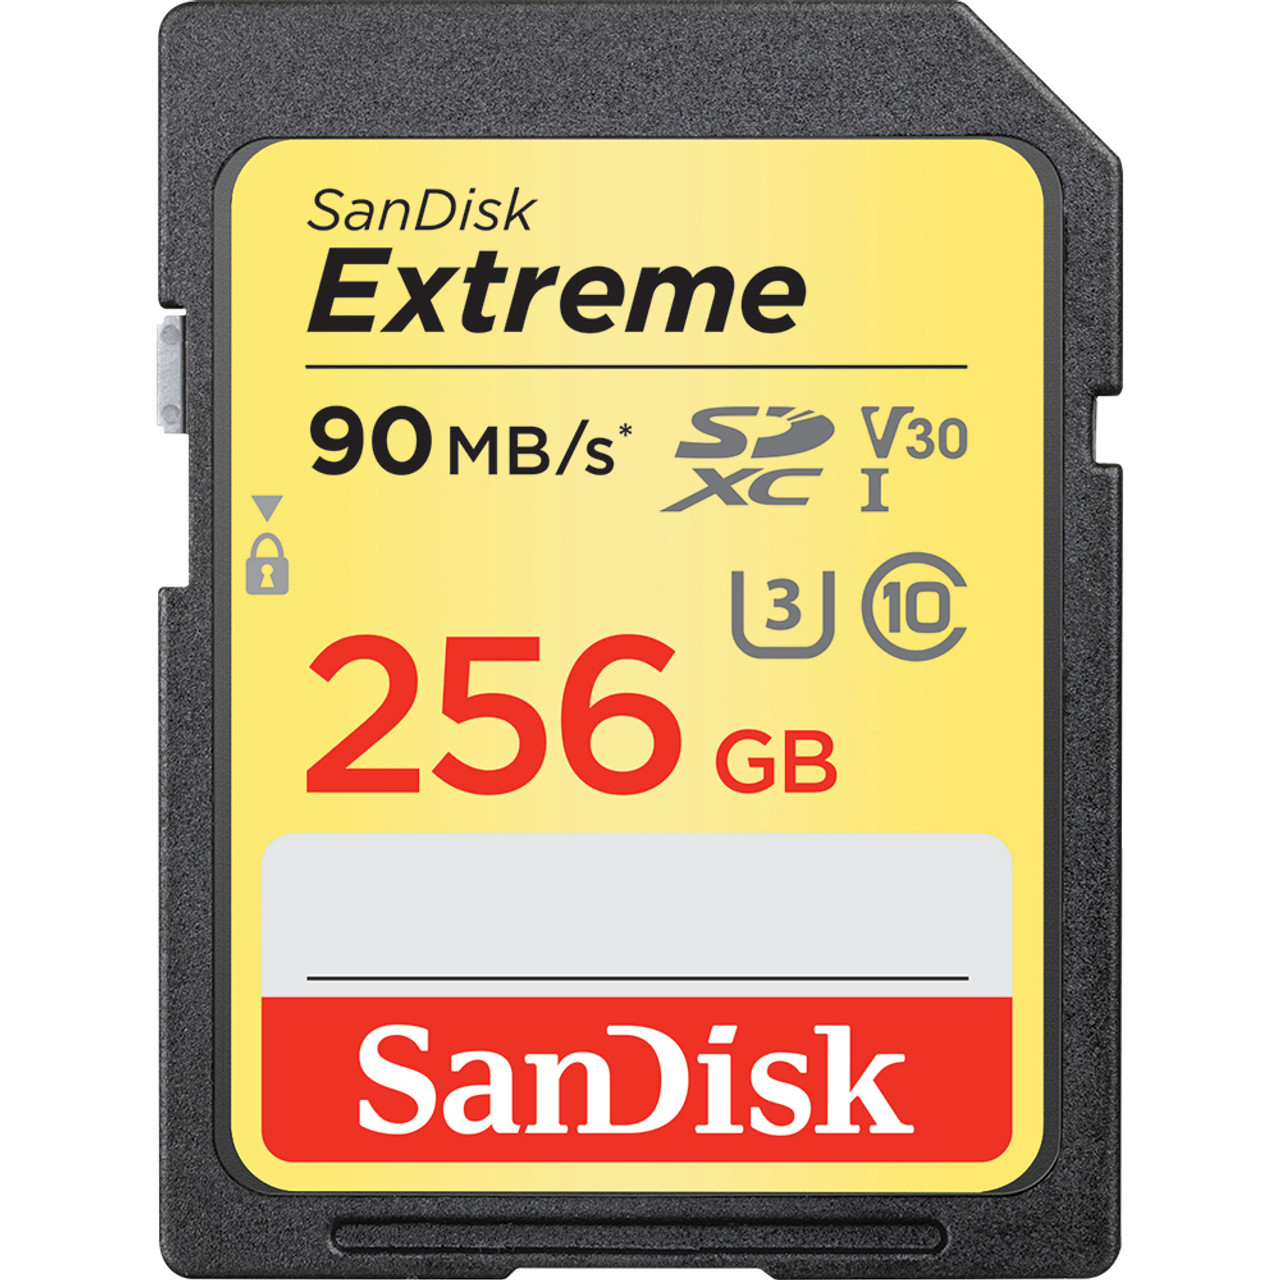 Sandisk Extreme 256GB SDXC UHS-I Class 10 memory card